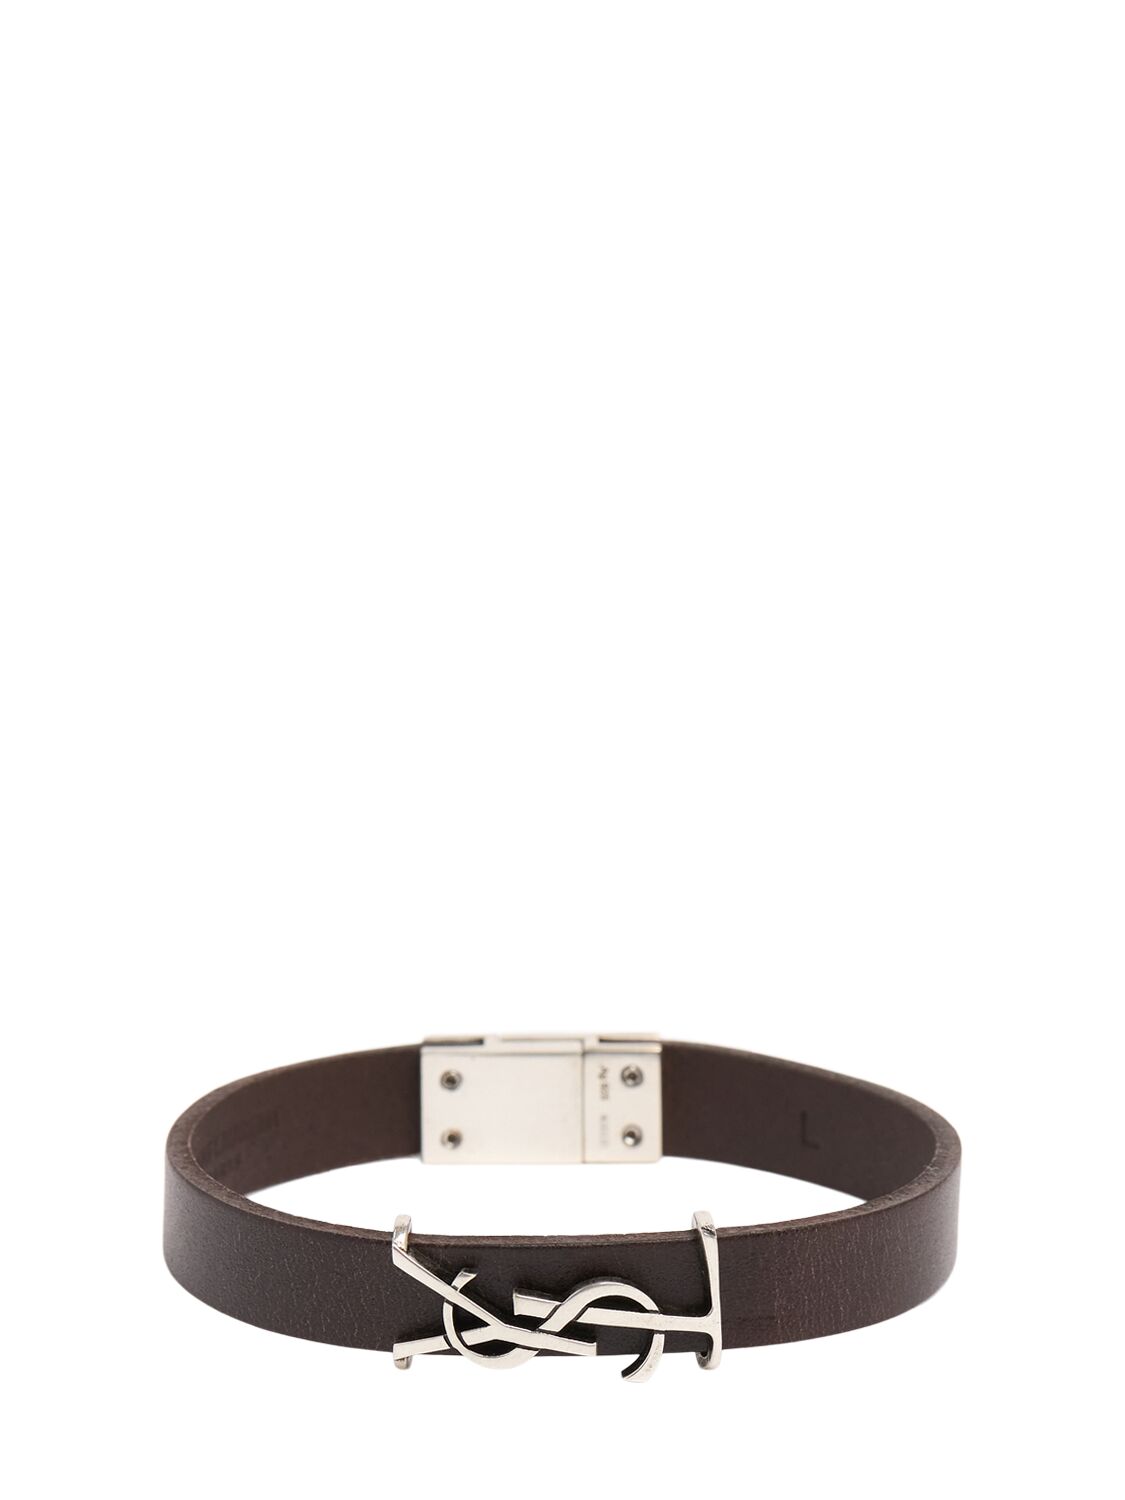 Ysl Single Wrap Leather Bracelet